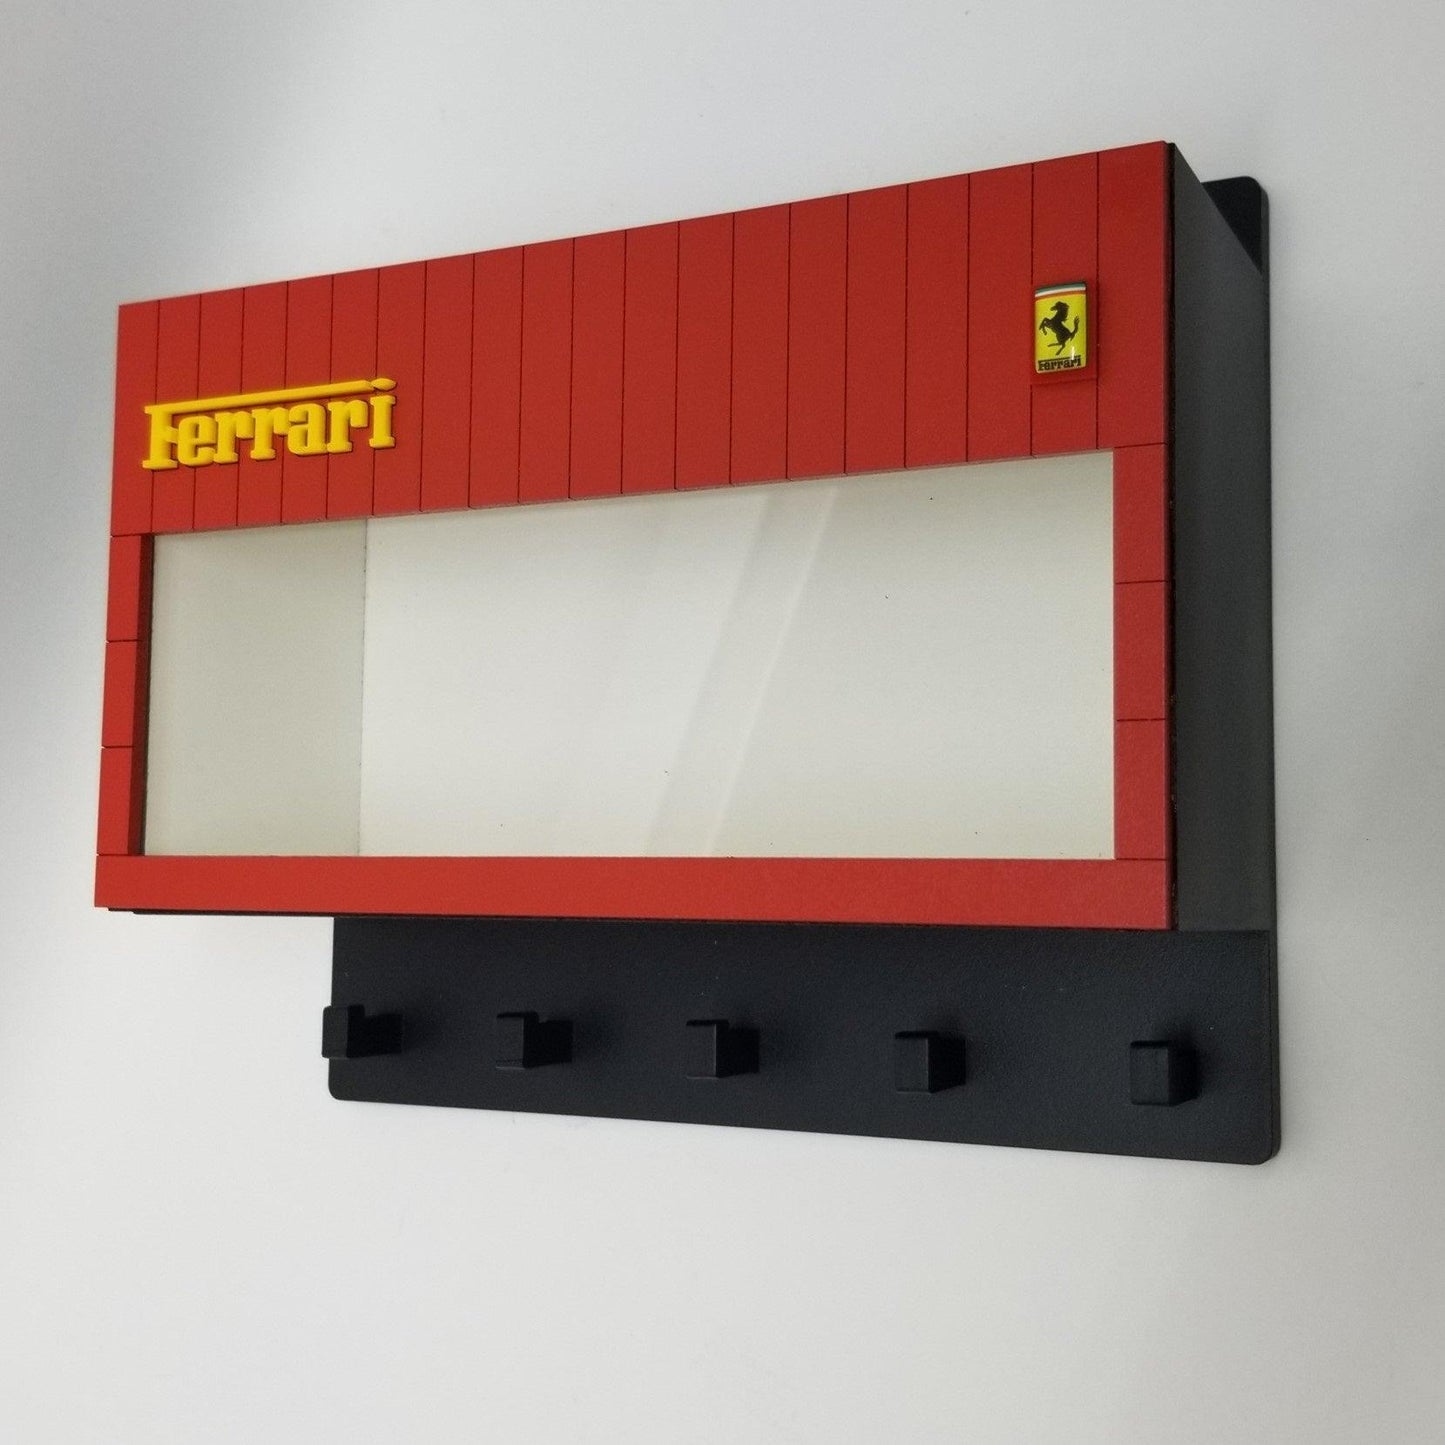 Ferrari Dealership Wall Key Hook Rack - Exclusive Item - Handcrafted Key Holder - Brazilian Shop